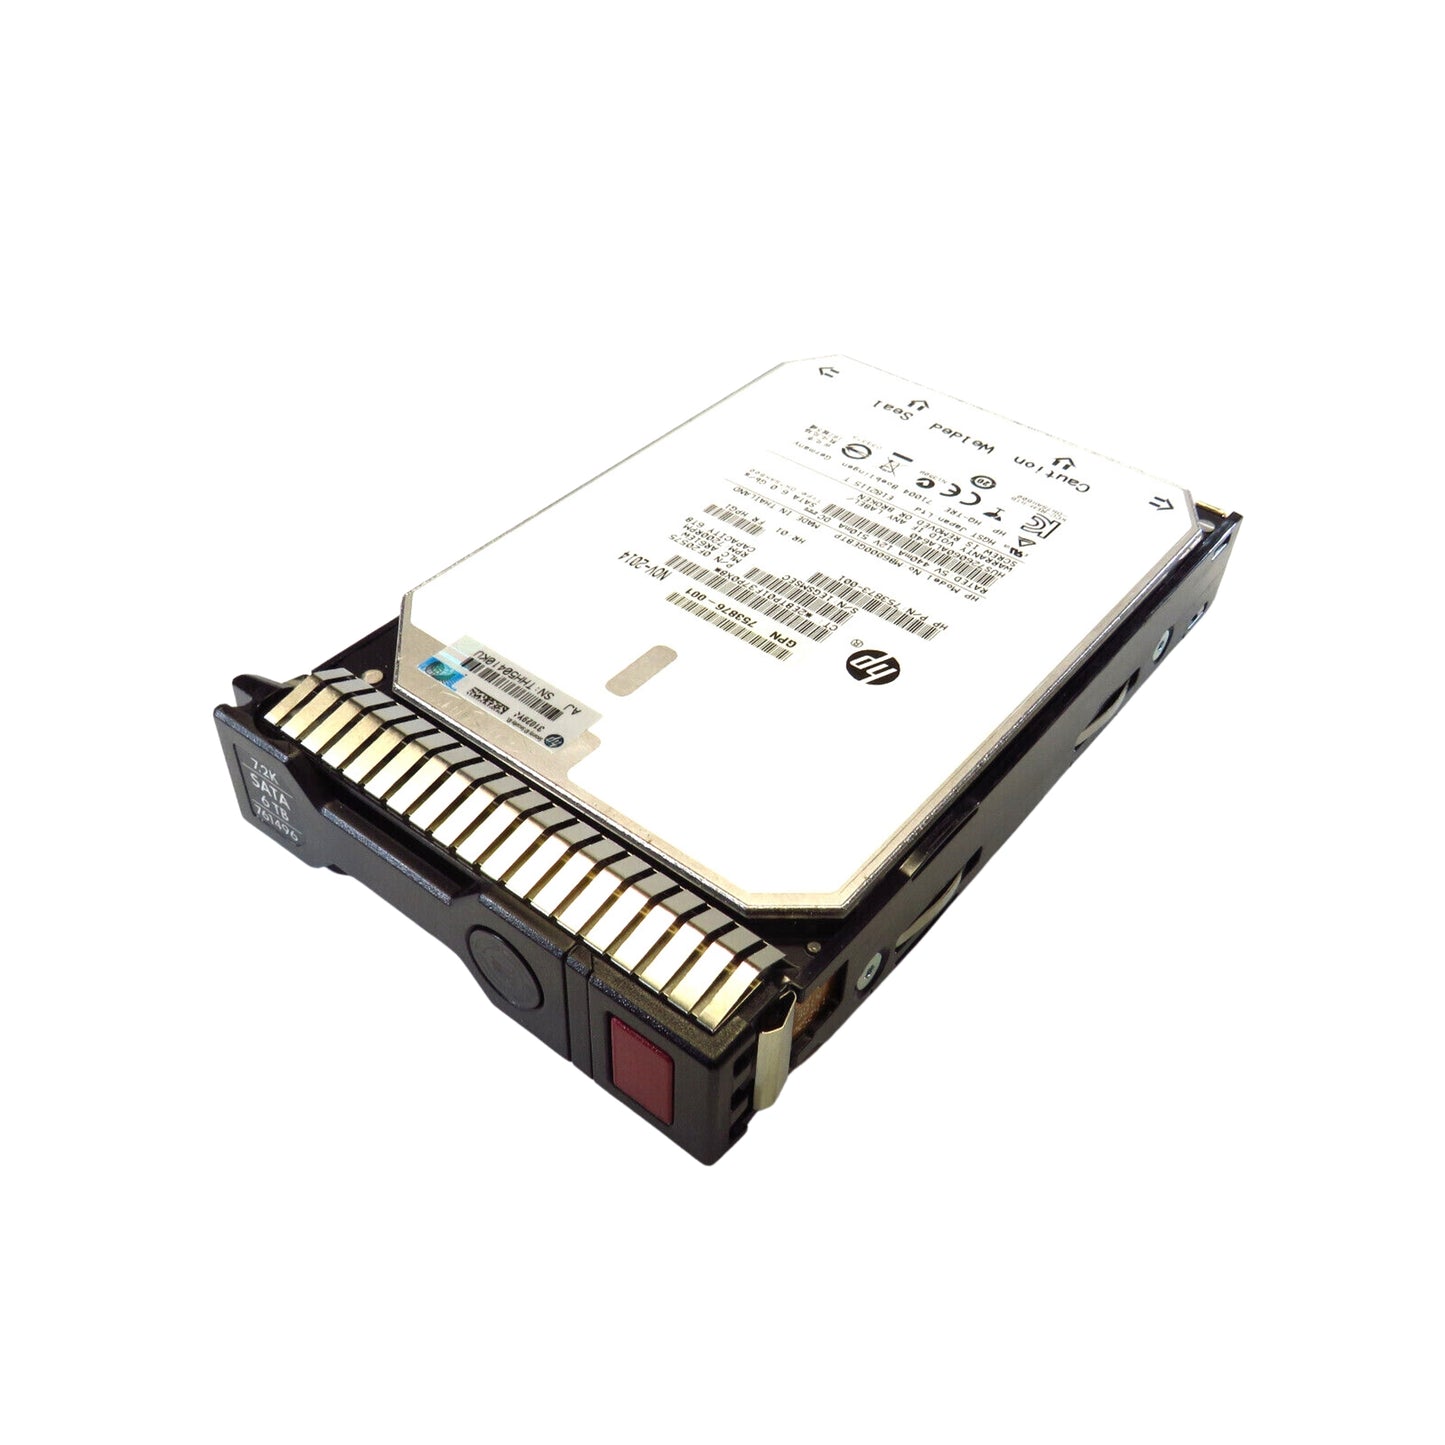 HP 761496-001 3.5" 6TB 7200RPM SATA III Hard Disk Drive (HDD), Silver (Refurbished)